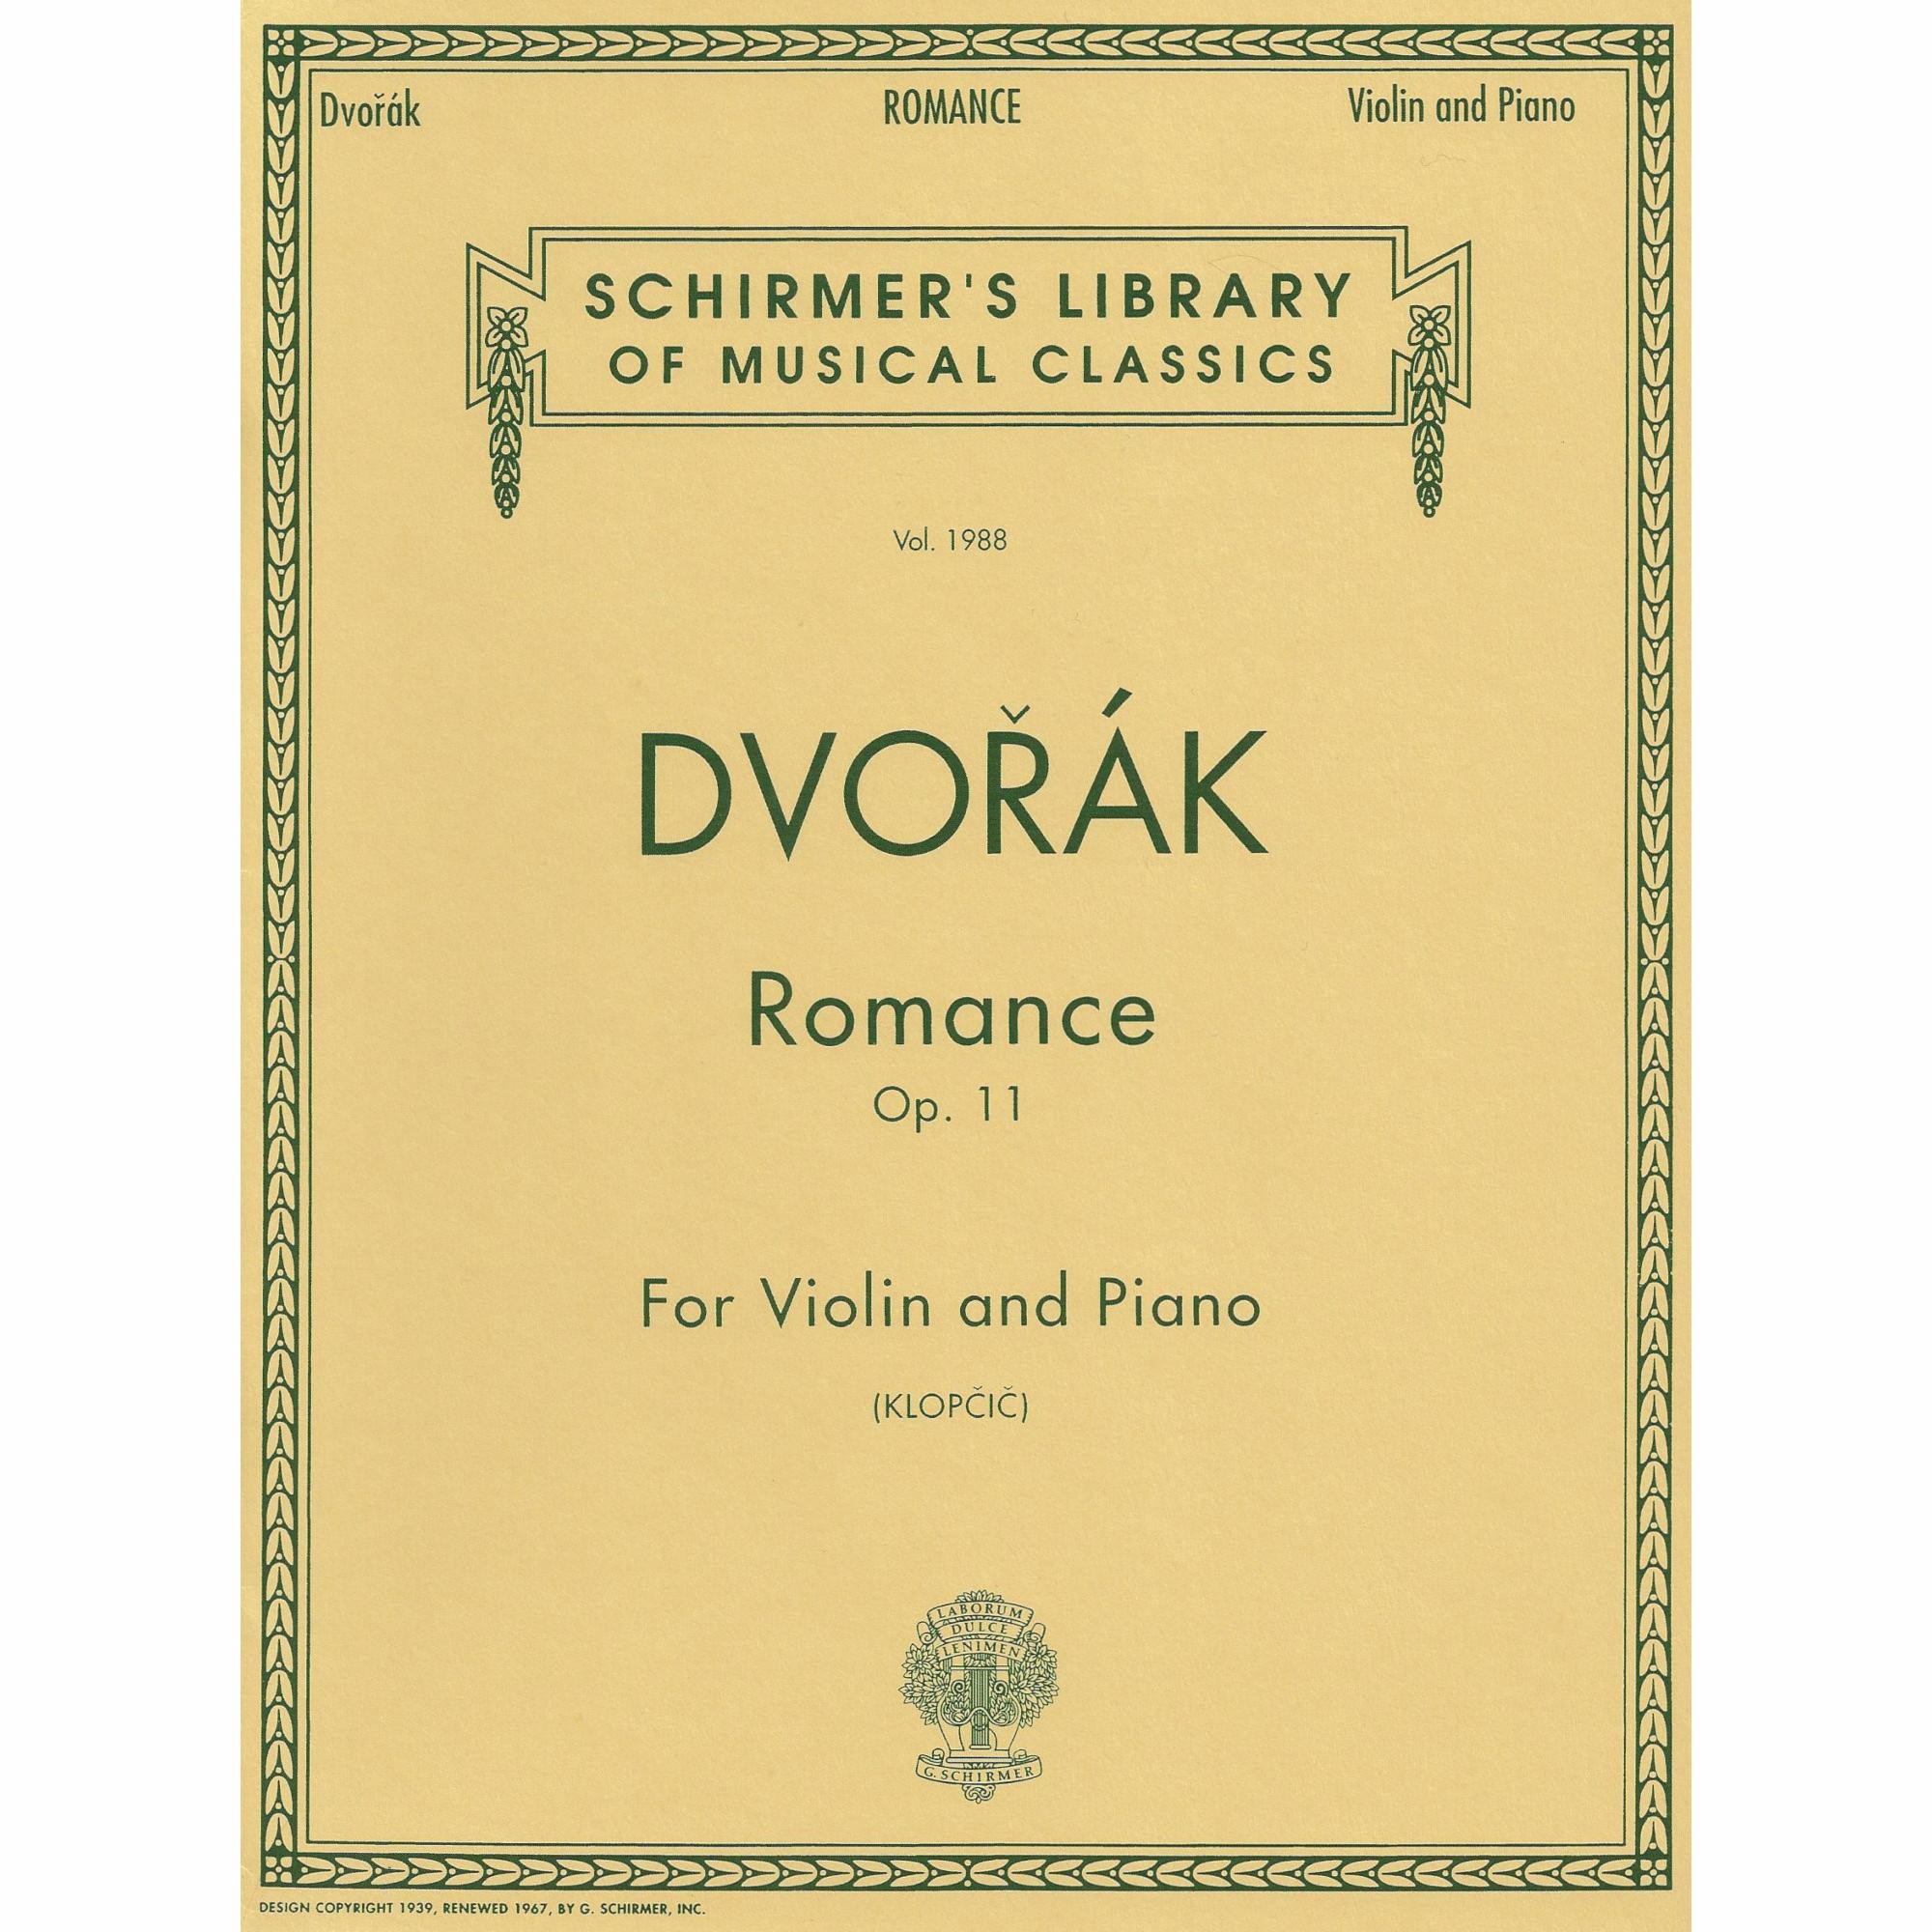 Dvorak -- Romance, Op. 11 for Violin and Piano